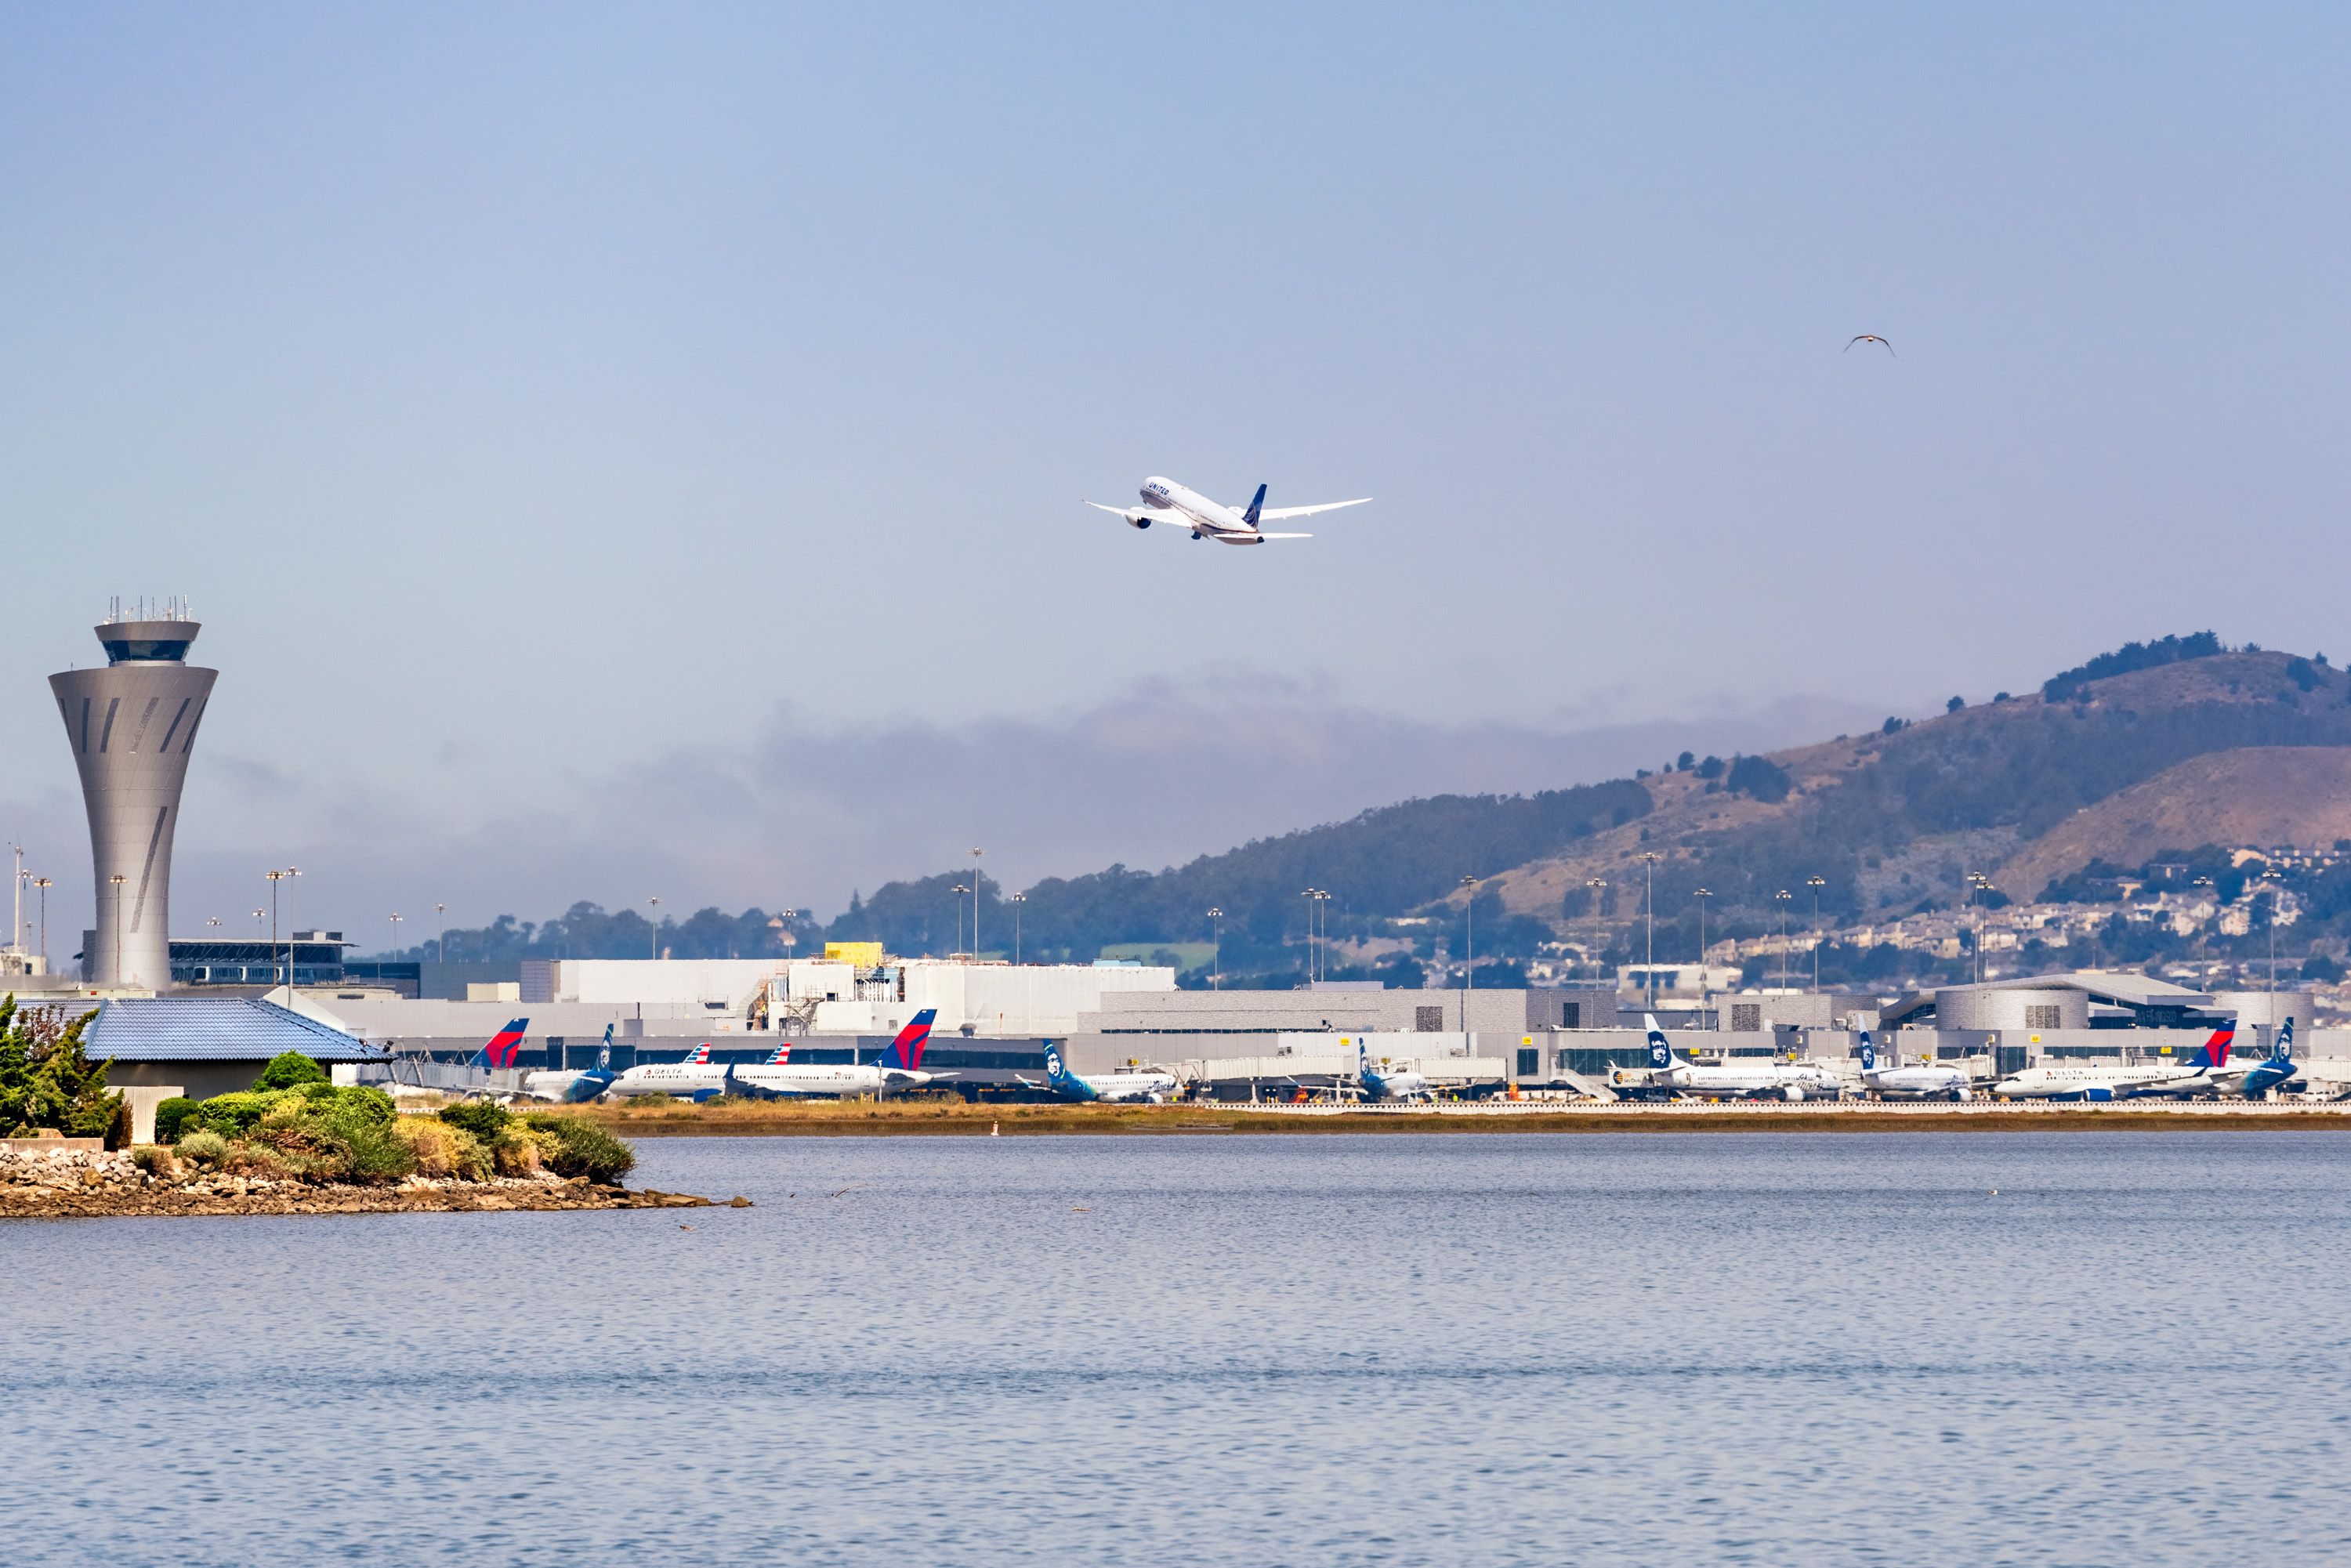 Boeing 787 Dreamliner departing from San Francisco International Airport.